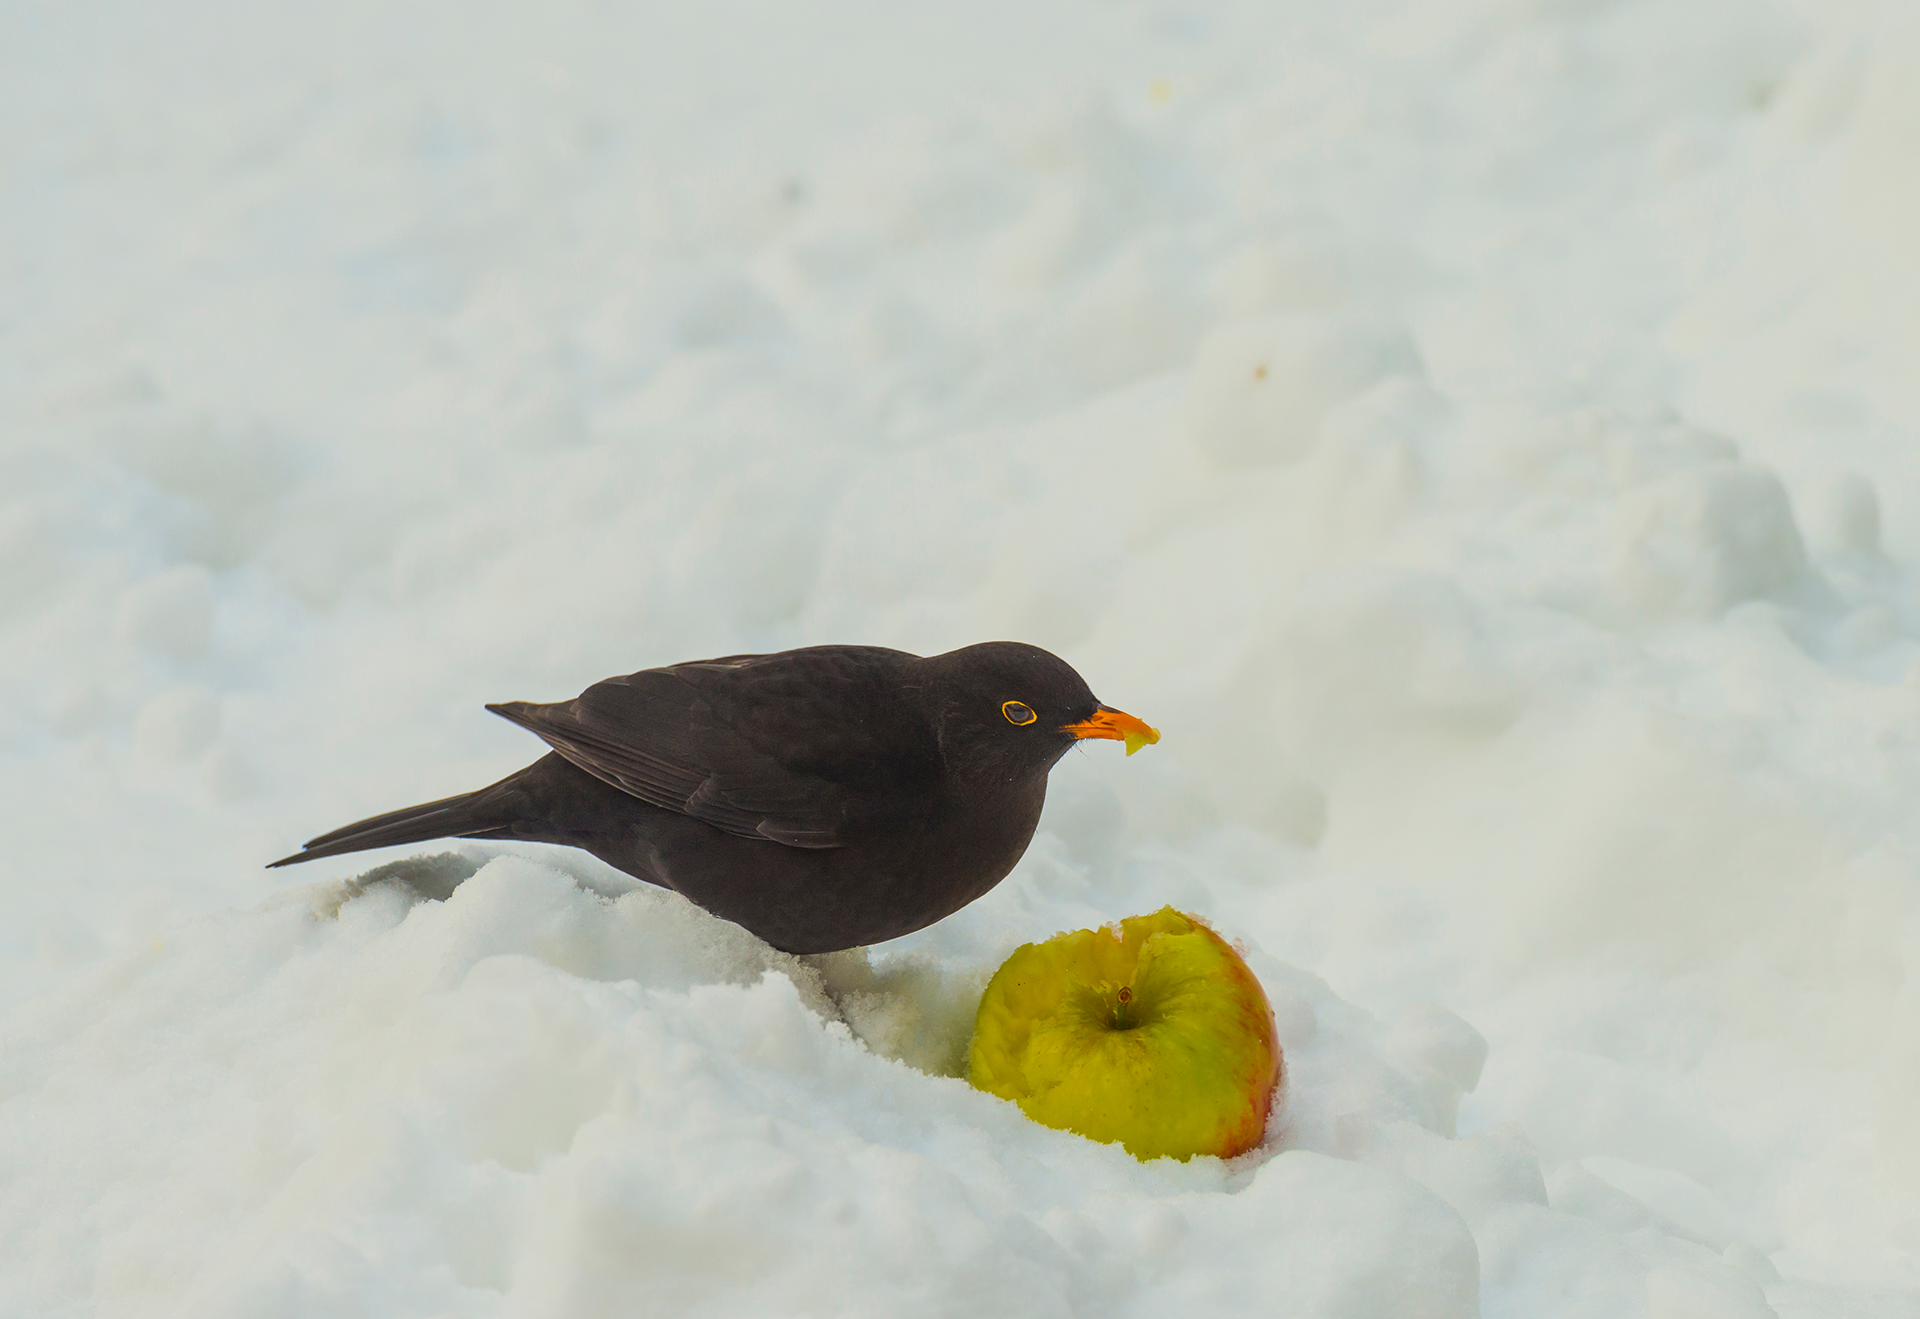 Blackbird eating an apple in the snow